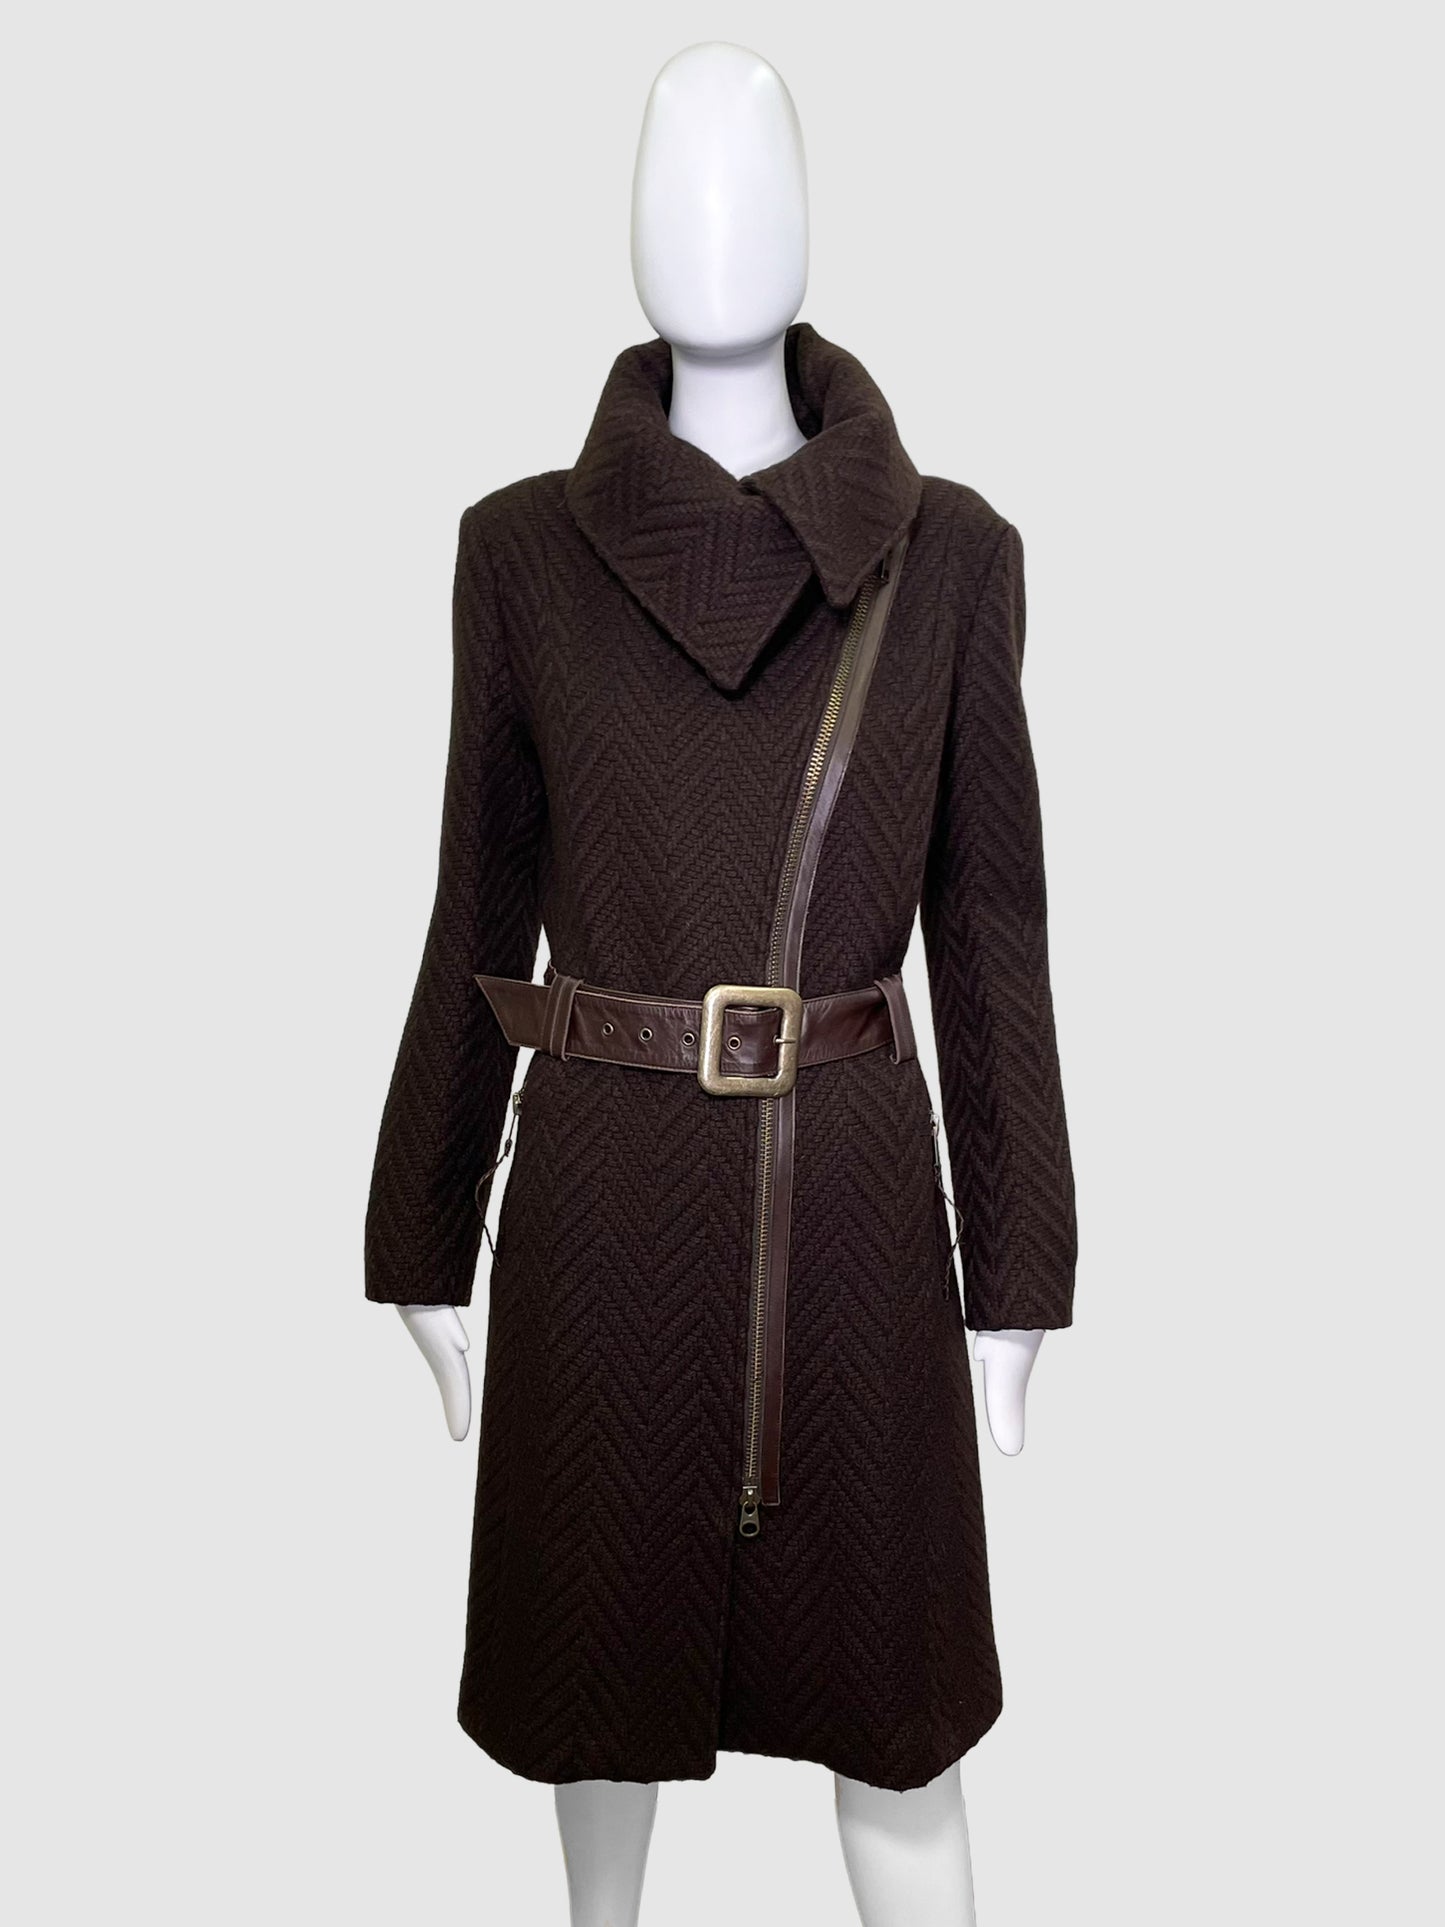 Mackage Wool Blend Belted Coat - Size L